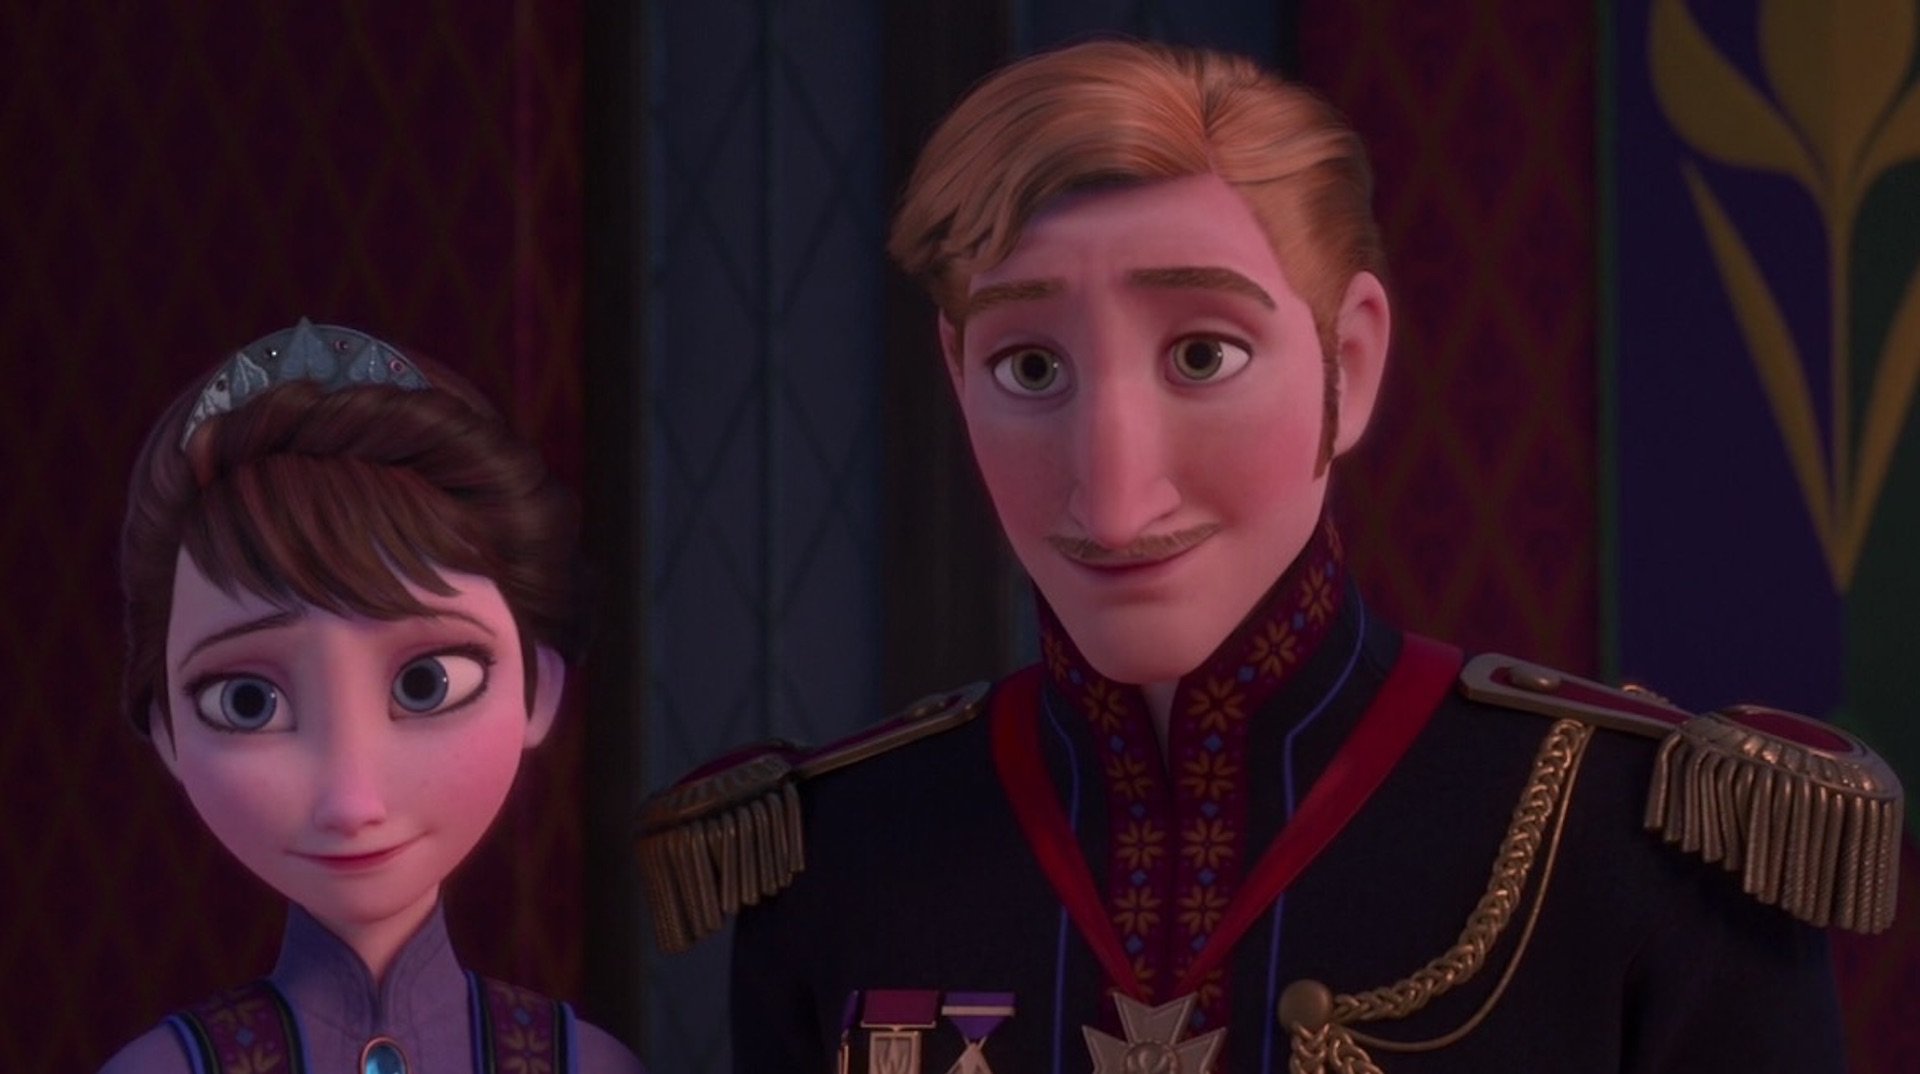 Anna's parents who look a bit royal